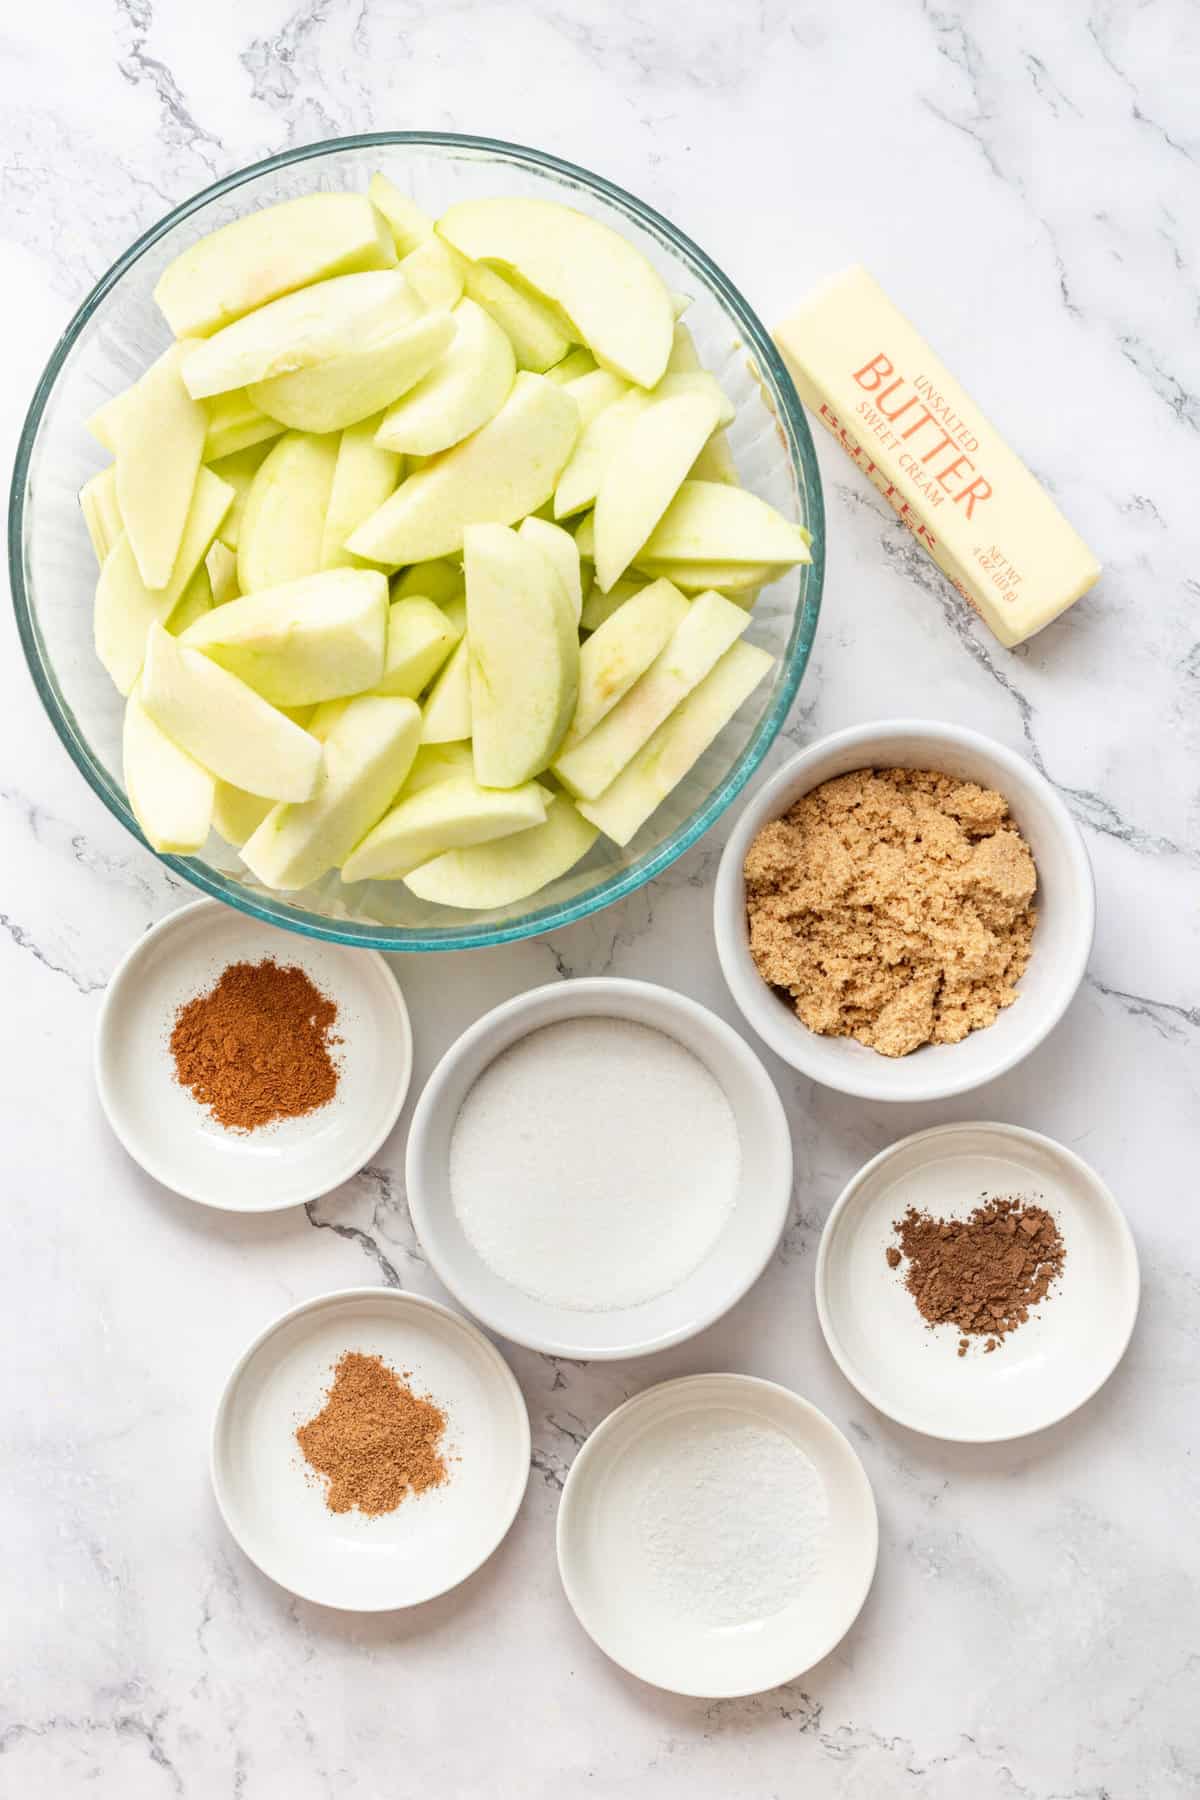 ingredients to make fried apples